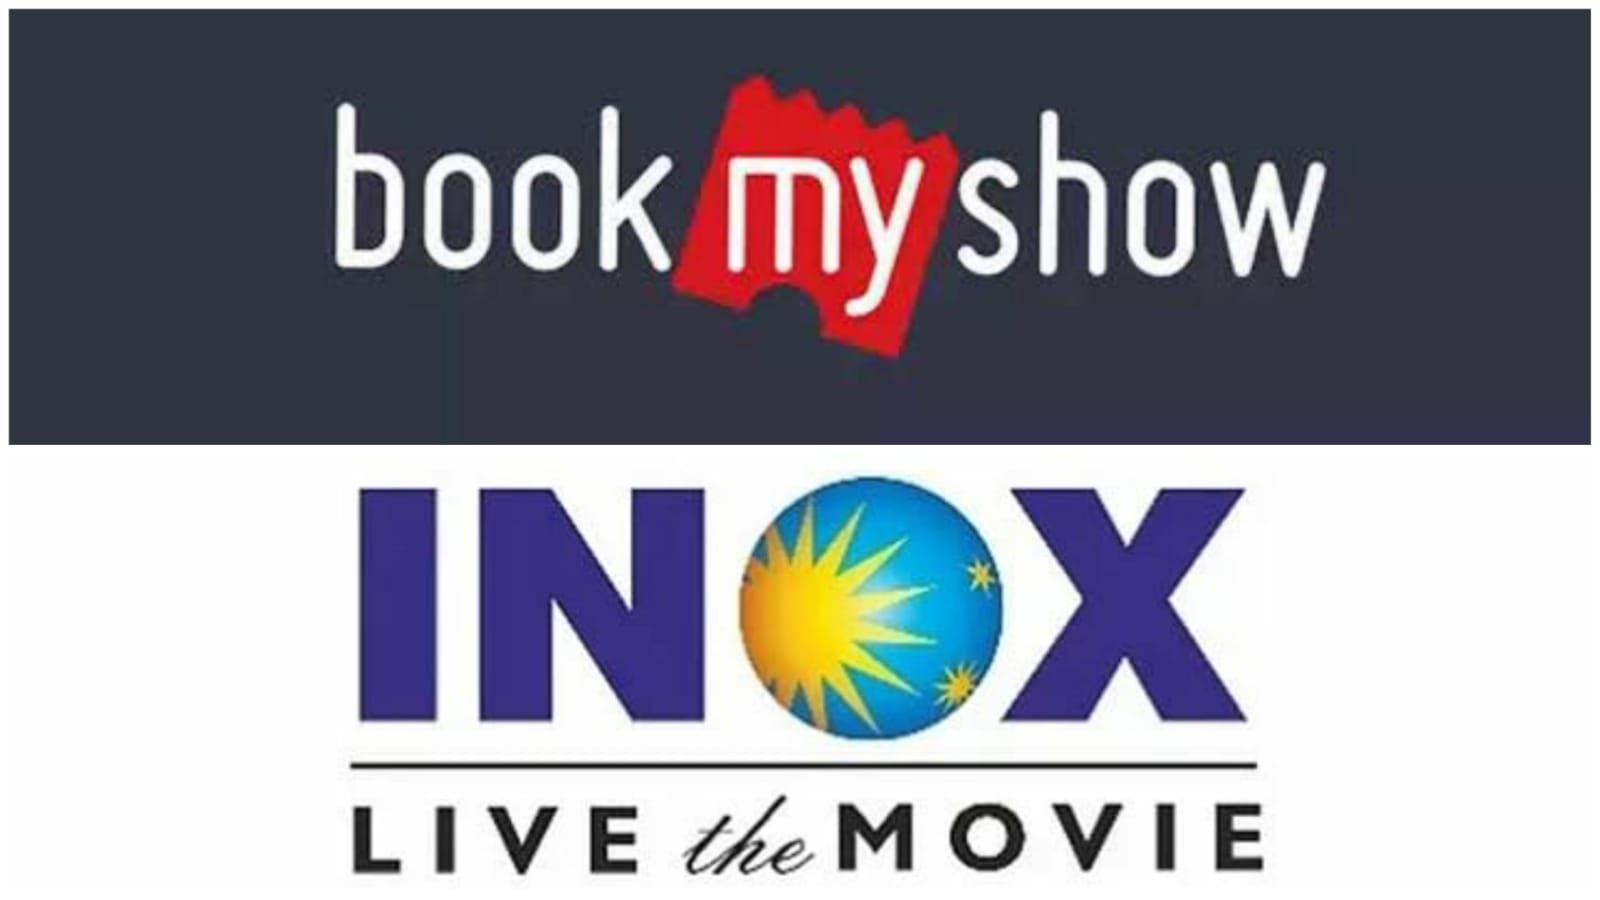 Reclaiming 2021 as #EntertainmentIsBack, the BookMyShow Way! | APN News